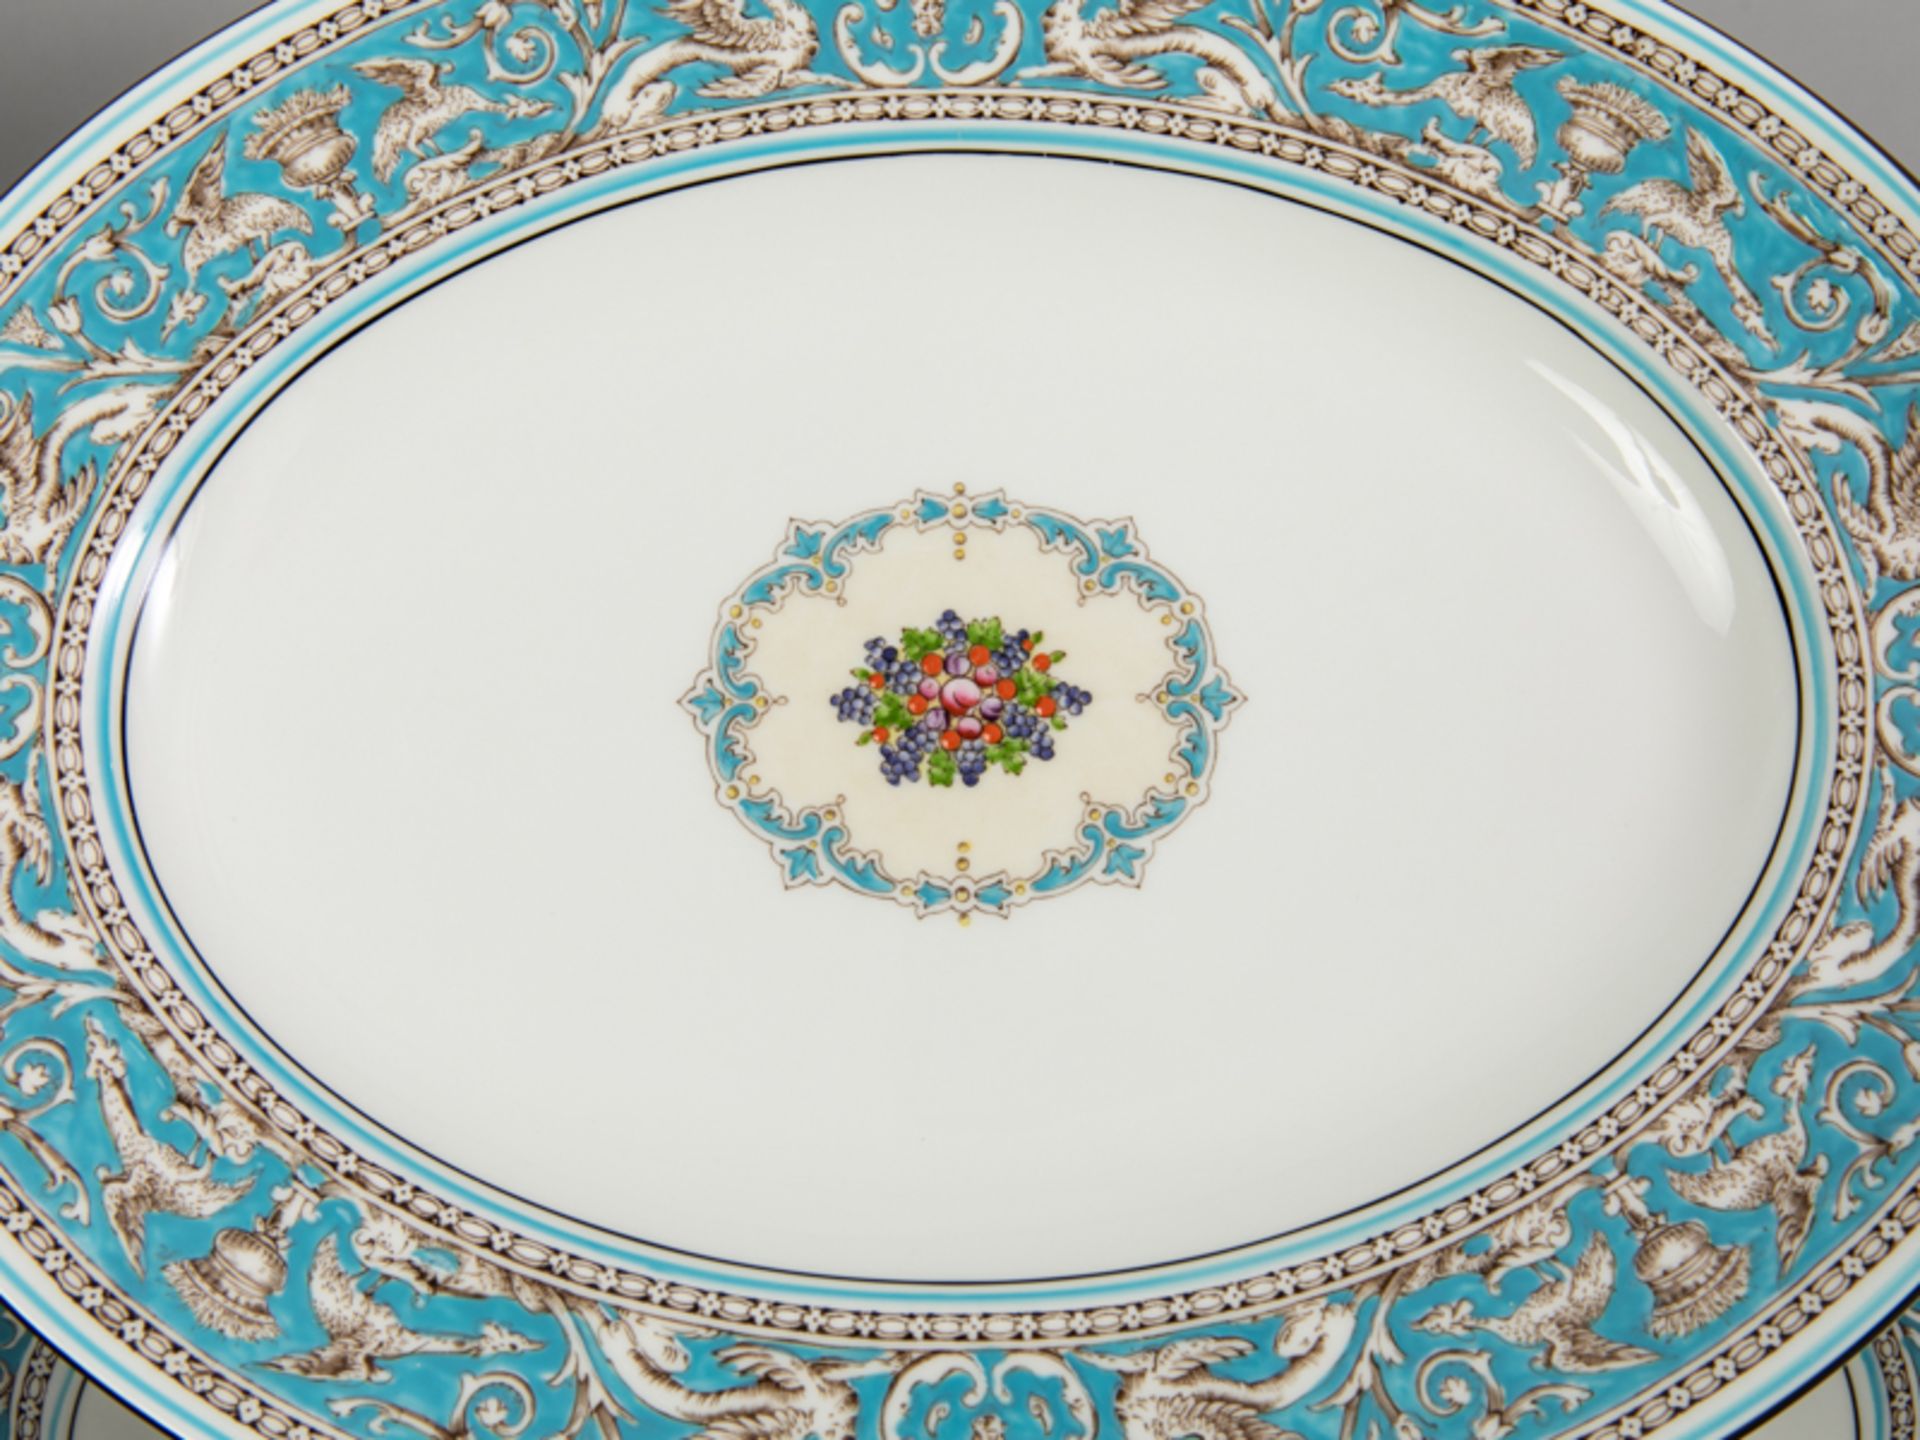 3 ovale Platten und 2 ovale Schalen, Form "Florentine Turquoise", Wedgwood, 20. Jh. - Image 2 of 3